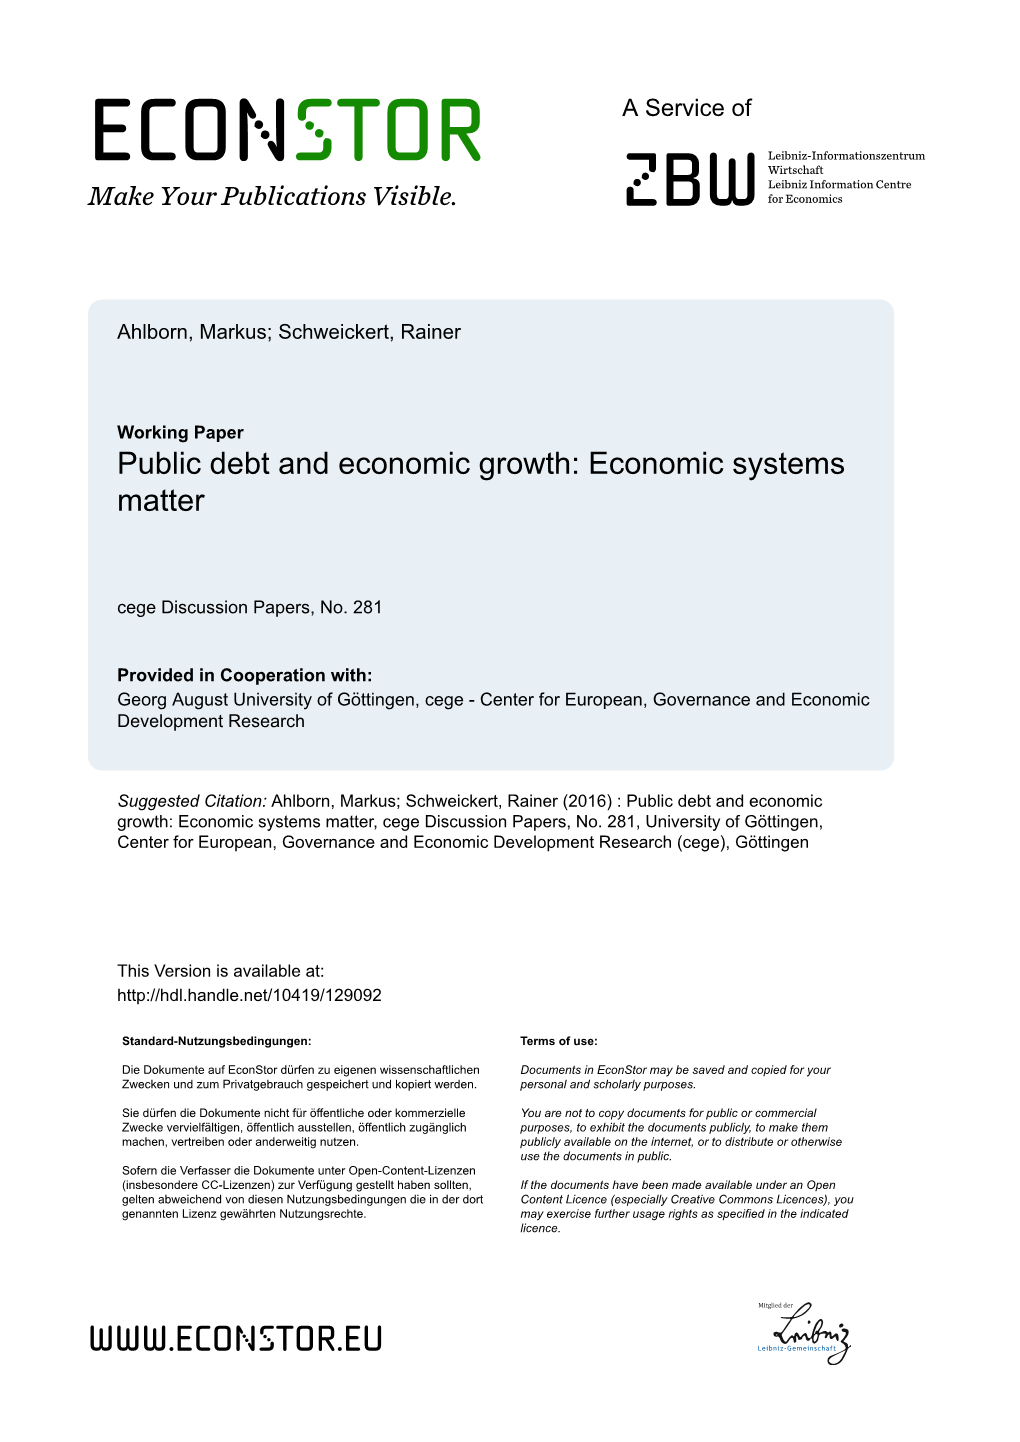 Public Debt and Economic Growth: Economic Systems Matter